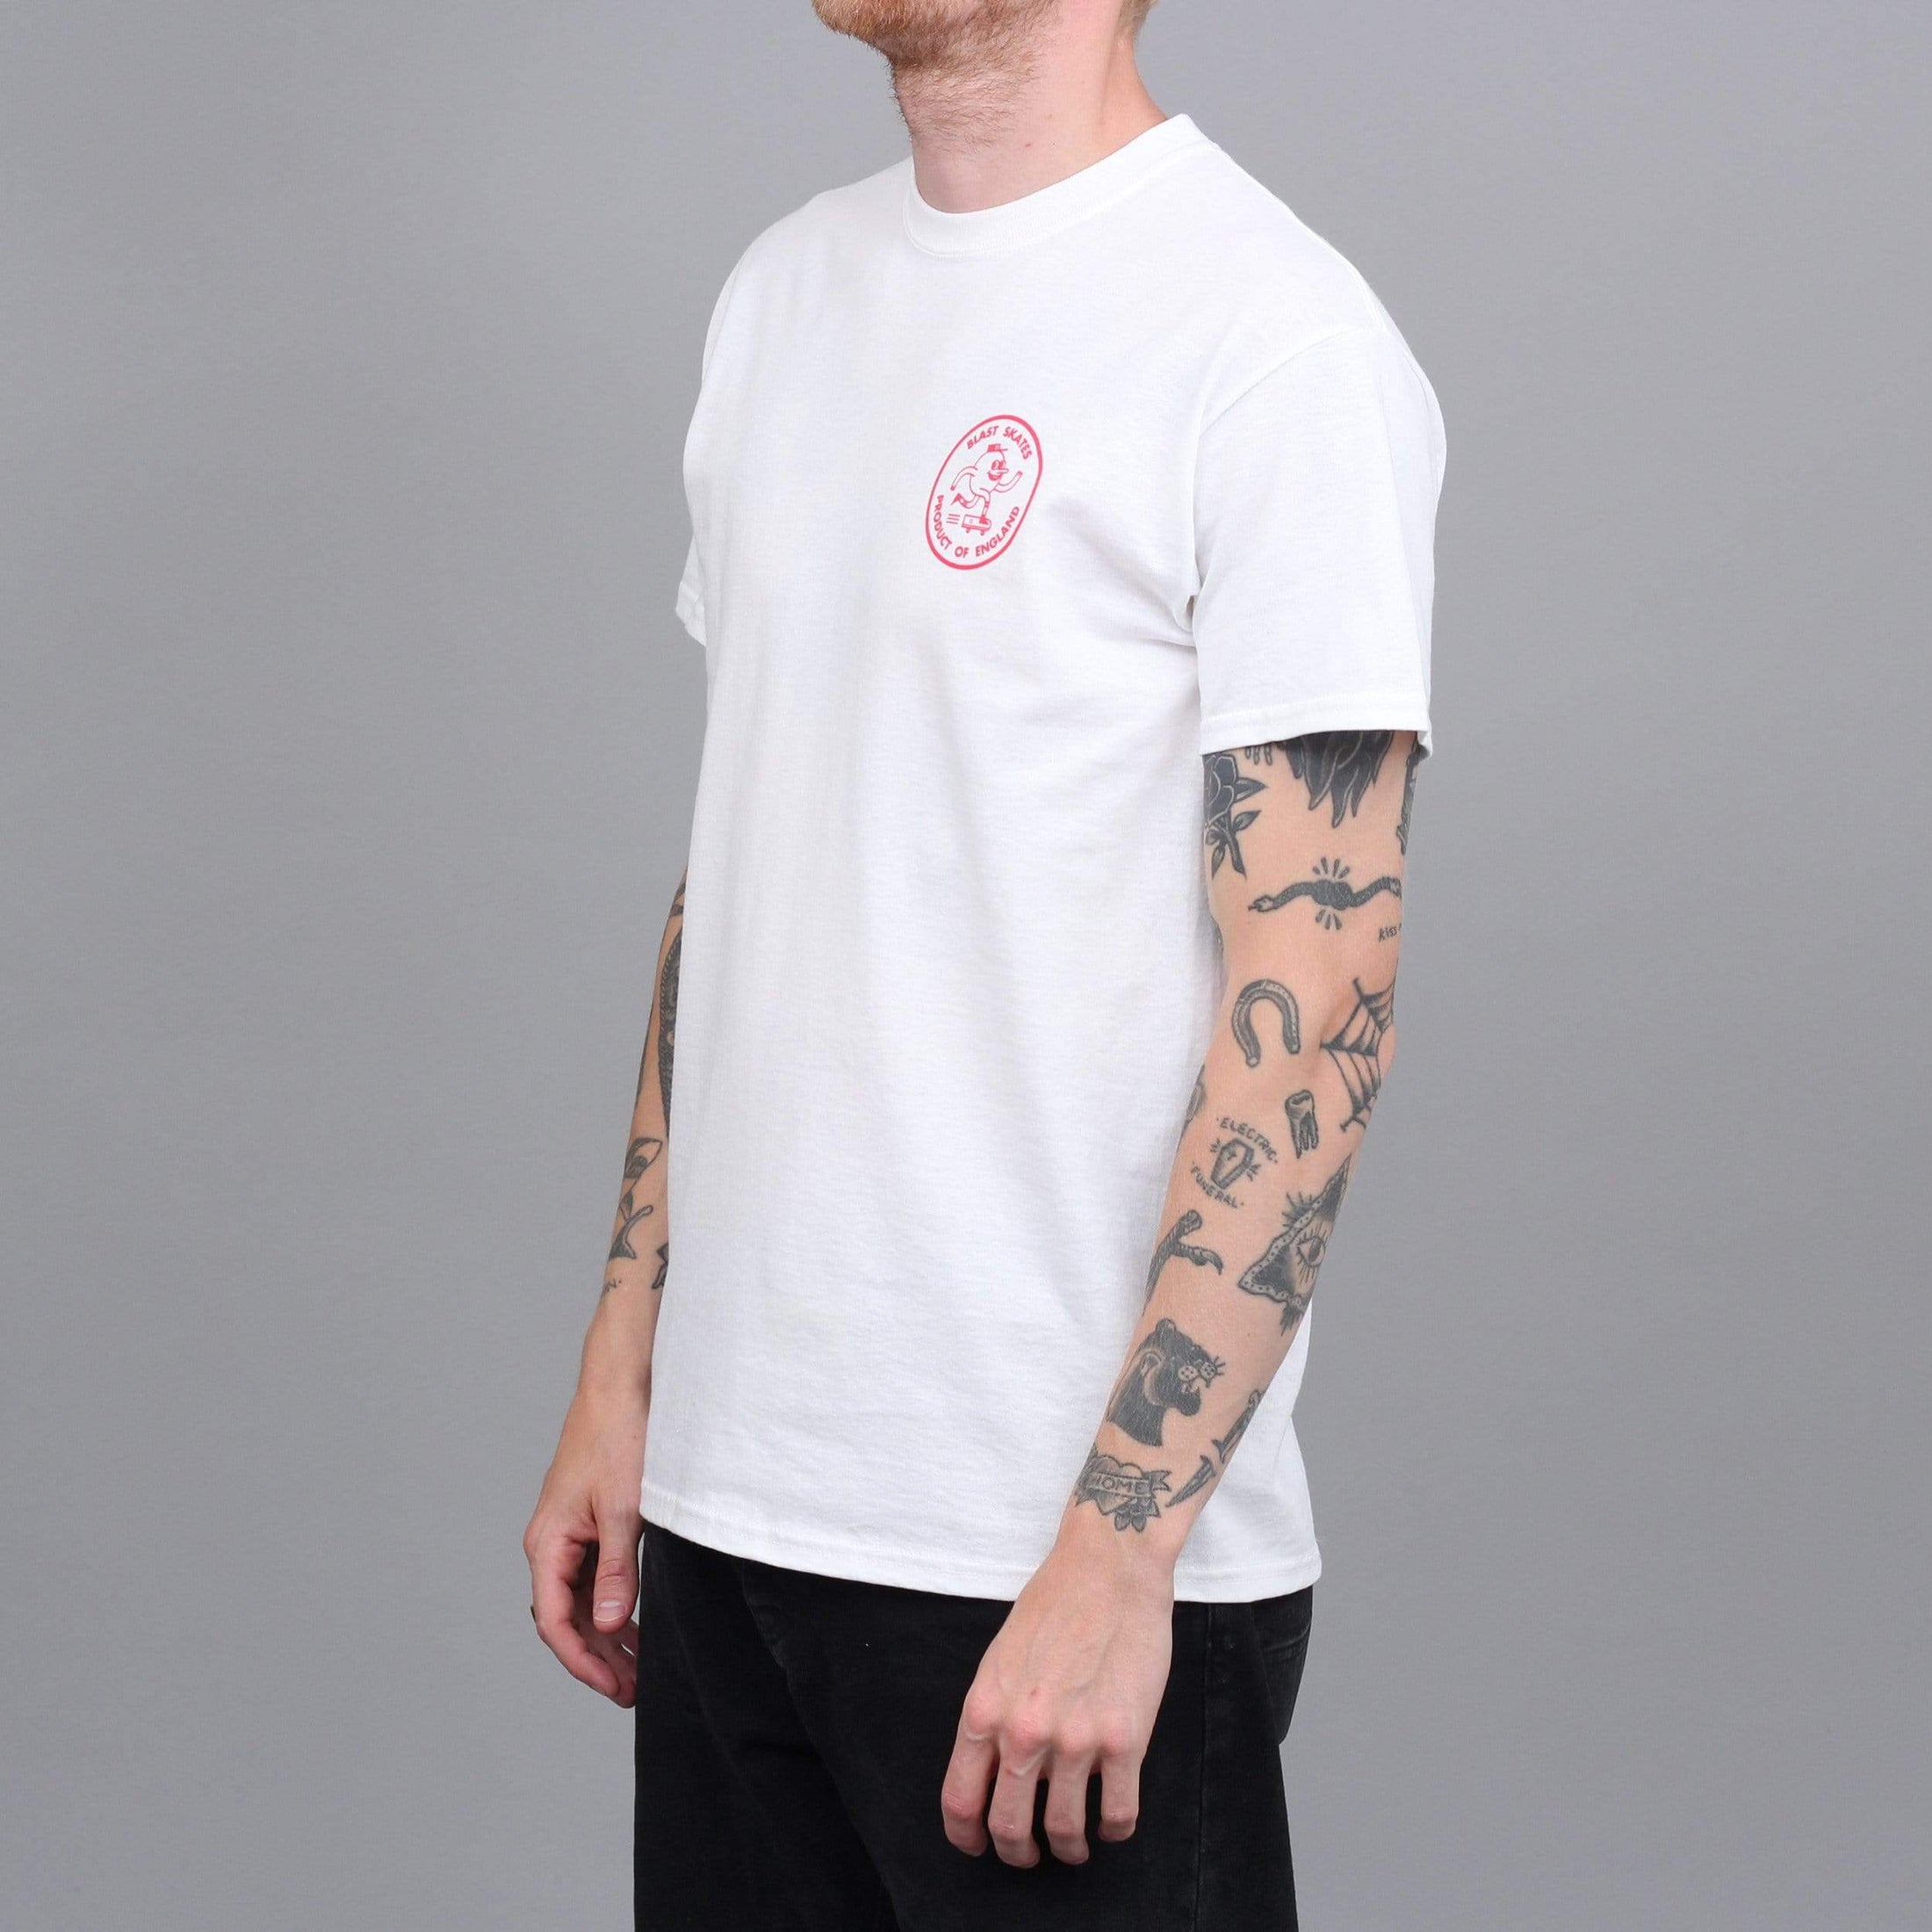 Blast Skates Round Logo T-Shirt White / Red